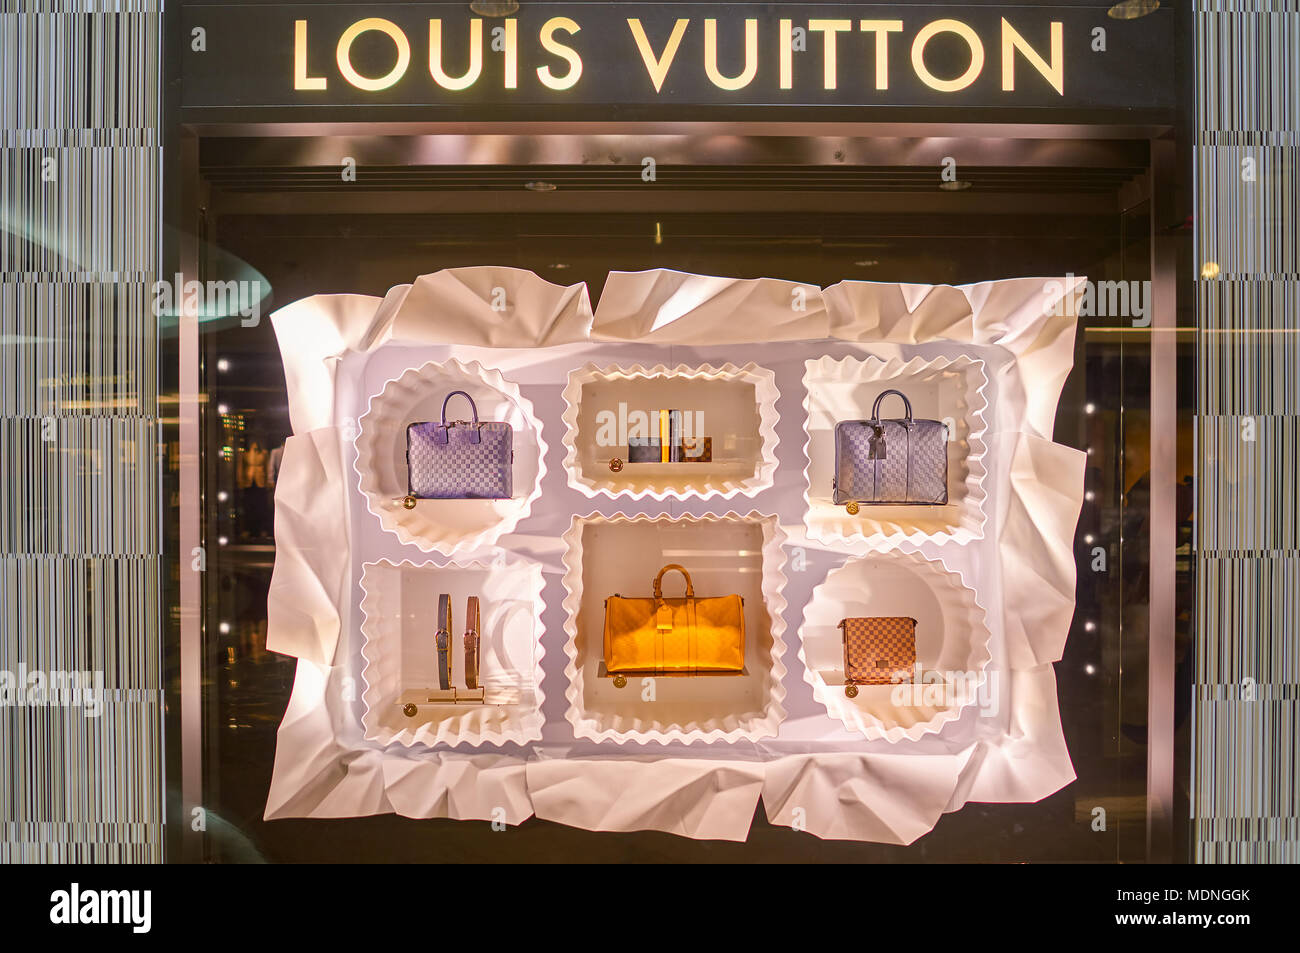 A Louis Vuitton LV Outlet at KLCC Kuala Lumpur Editorial Image